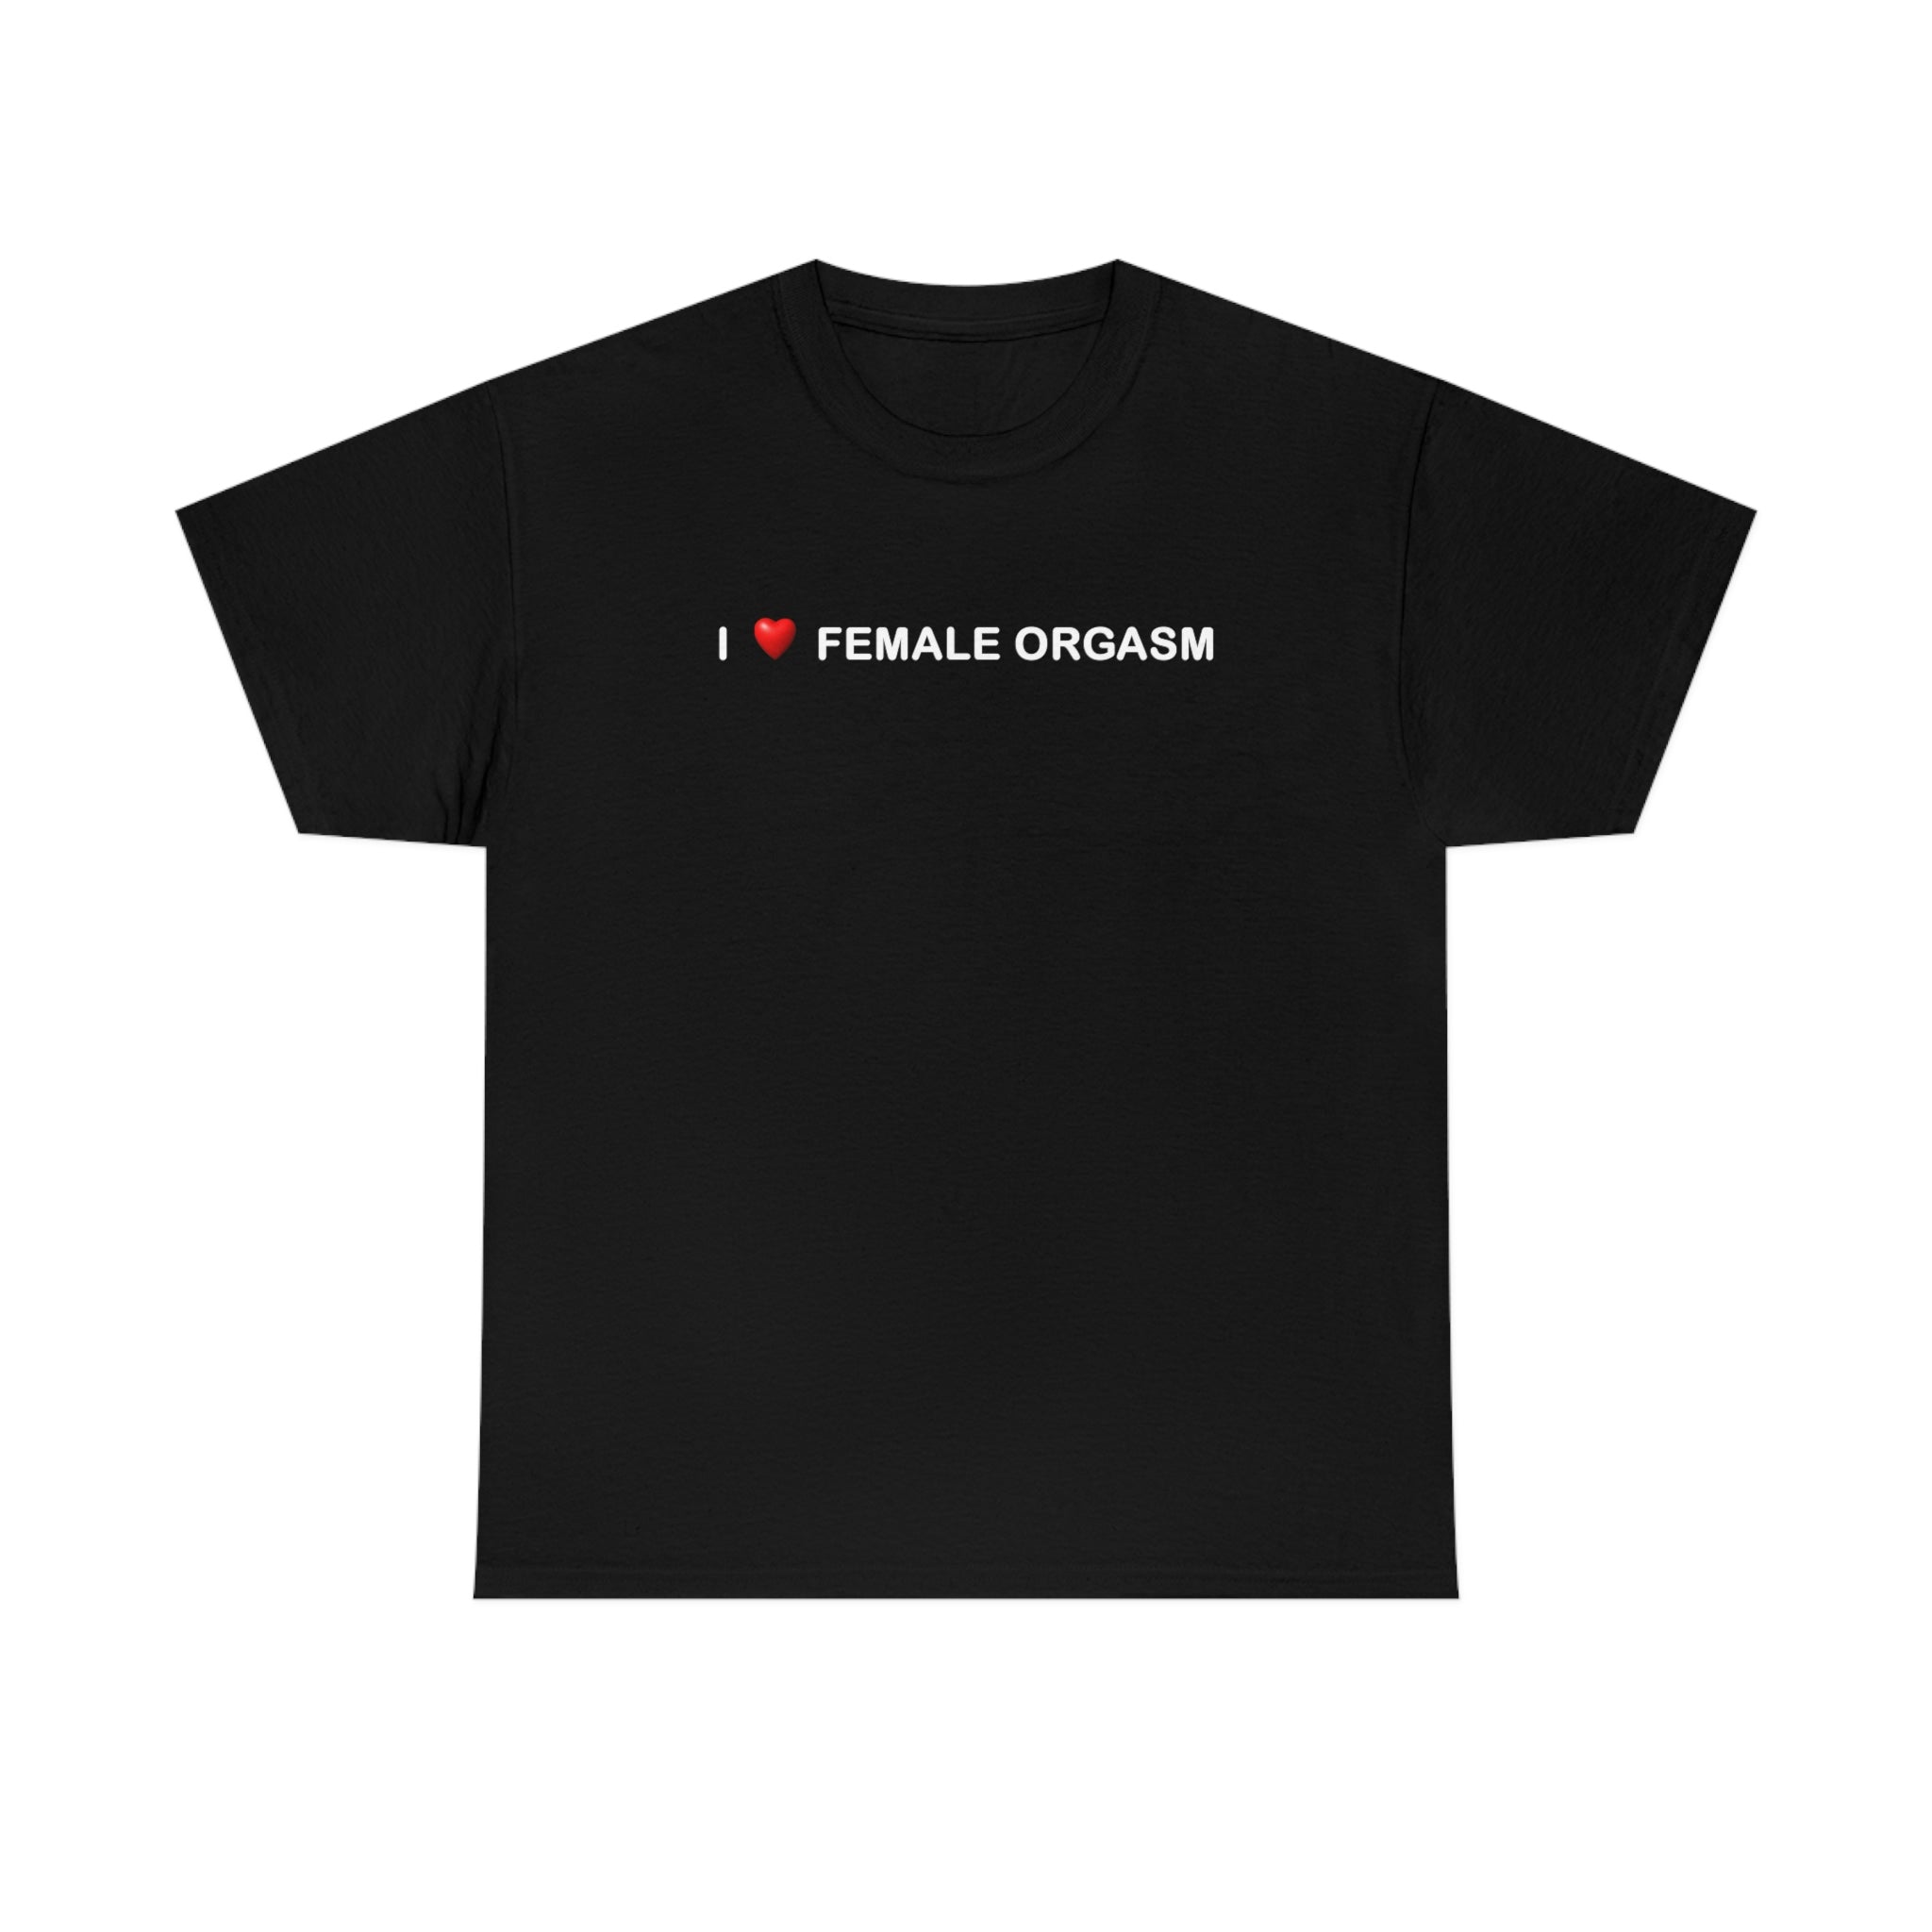 "I love female orgasm" t